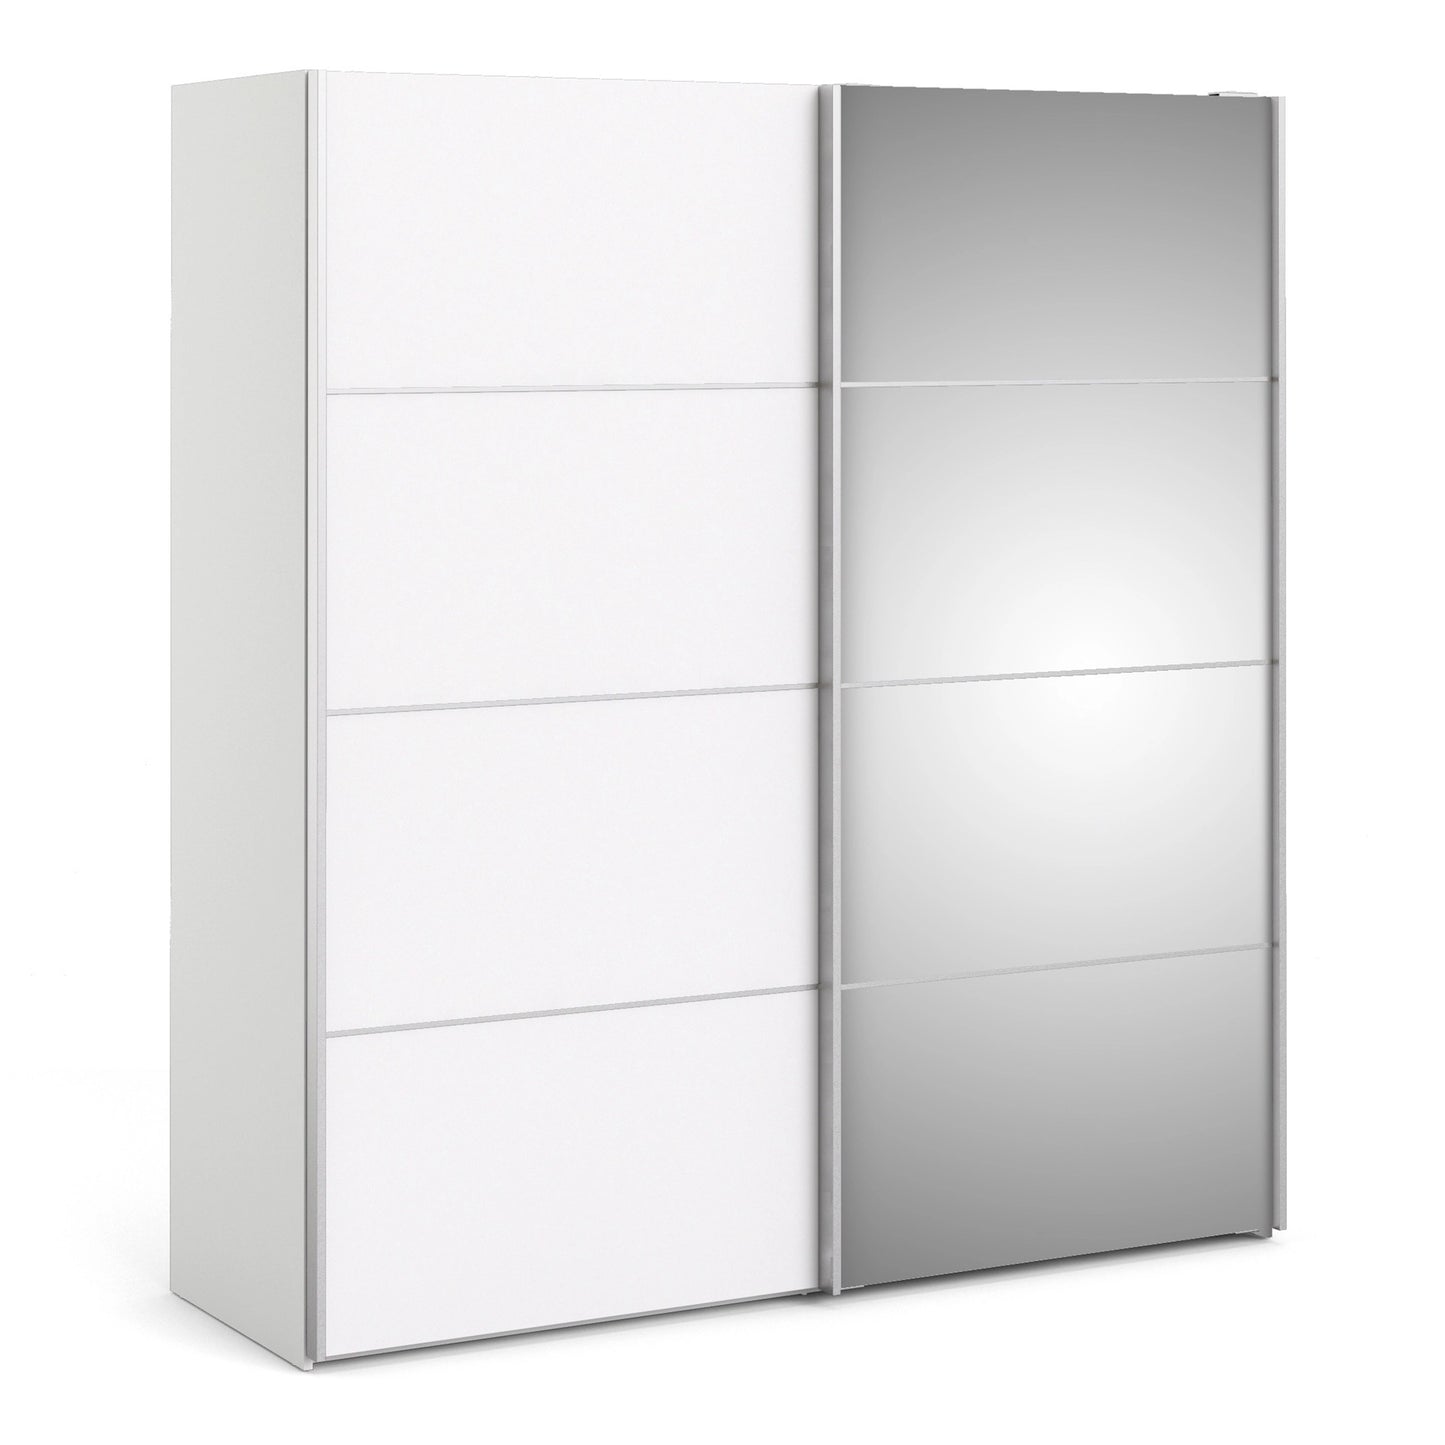 Furniture To Go Verona Sliding Wardrobe 180cm in White with White & Mirror Doors with 5 Shelves